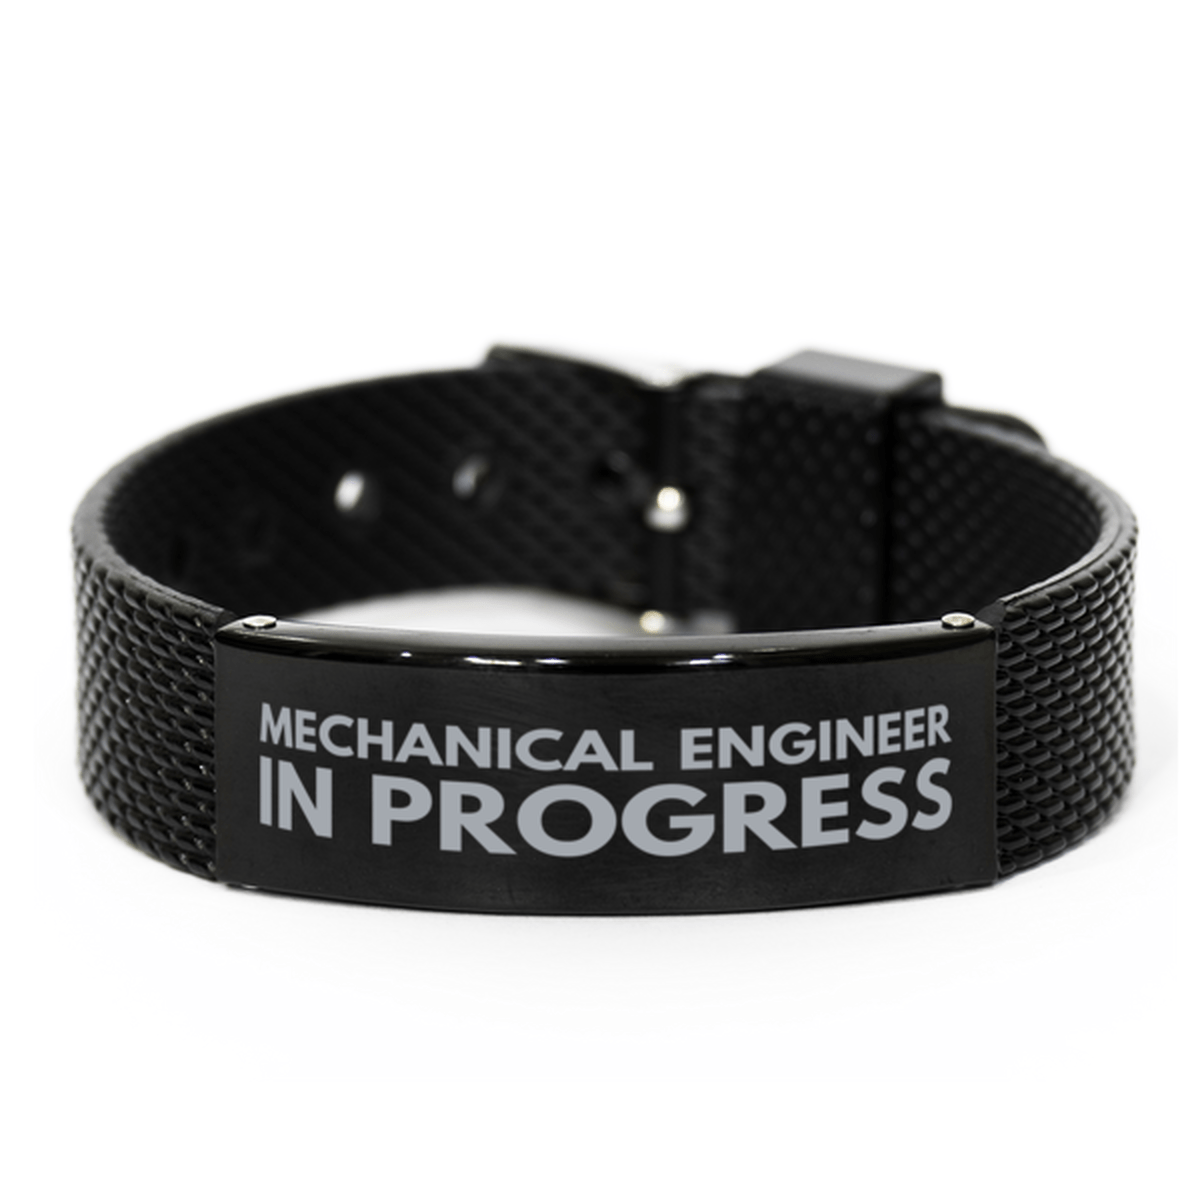 Inspirational Mechanical Engineer Black Shark Mesh Bracelet, Mechanical Engineer In Progress, Best Graduation Gifts for Students